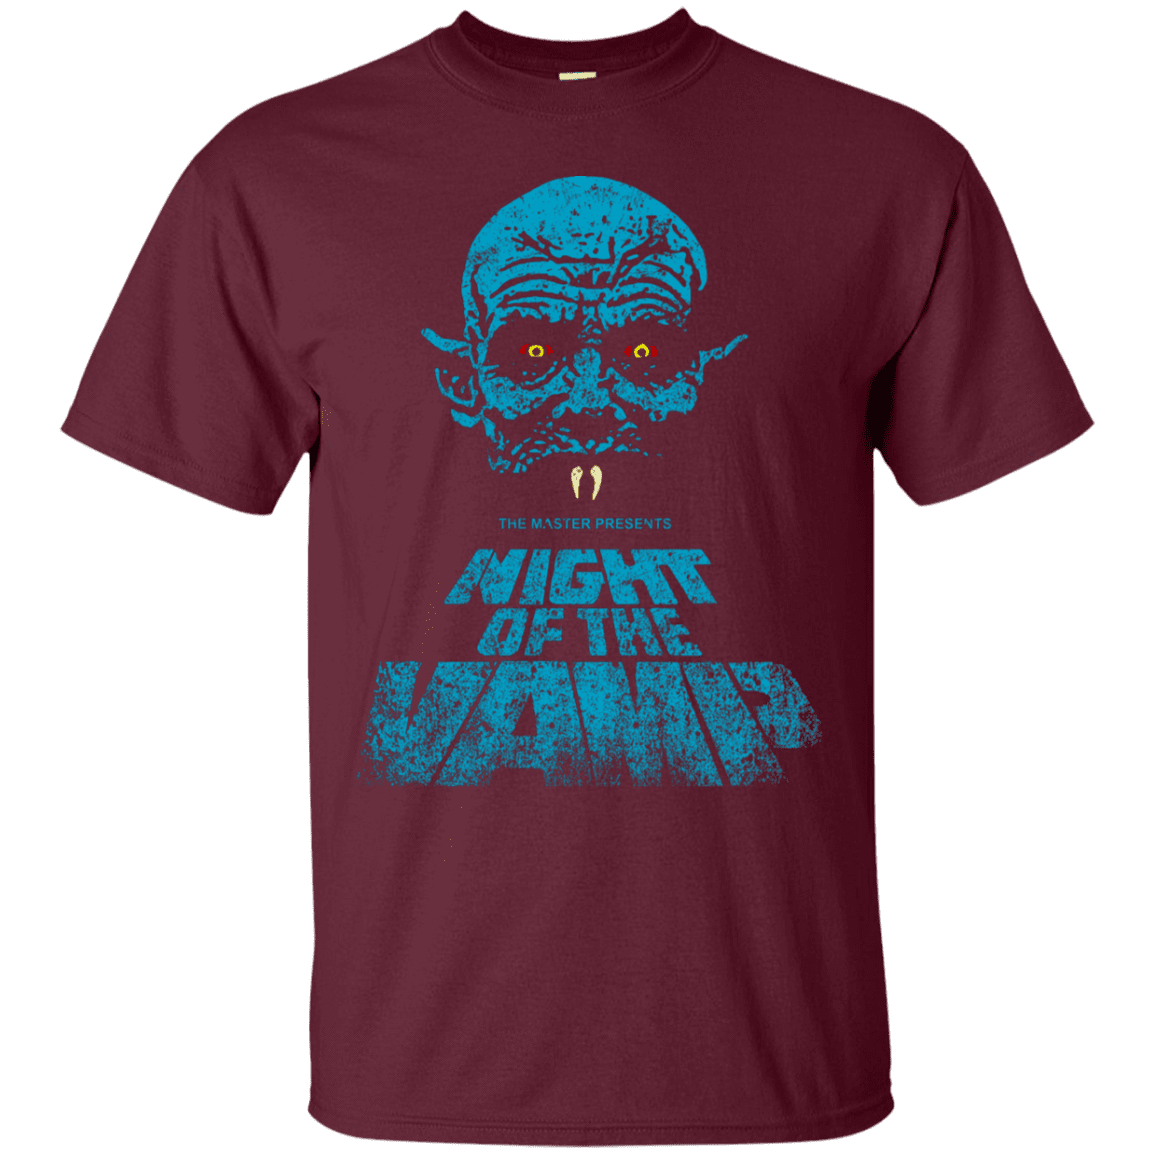 T-Shirts Maroon / S Night Vamp T-Shirt